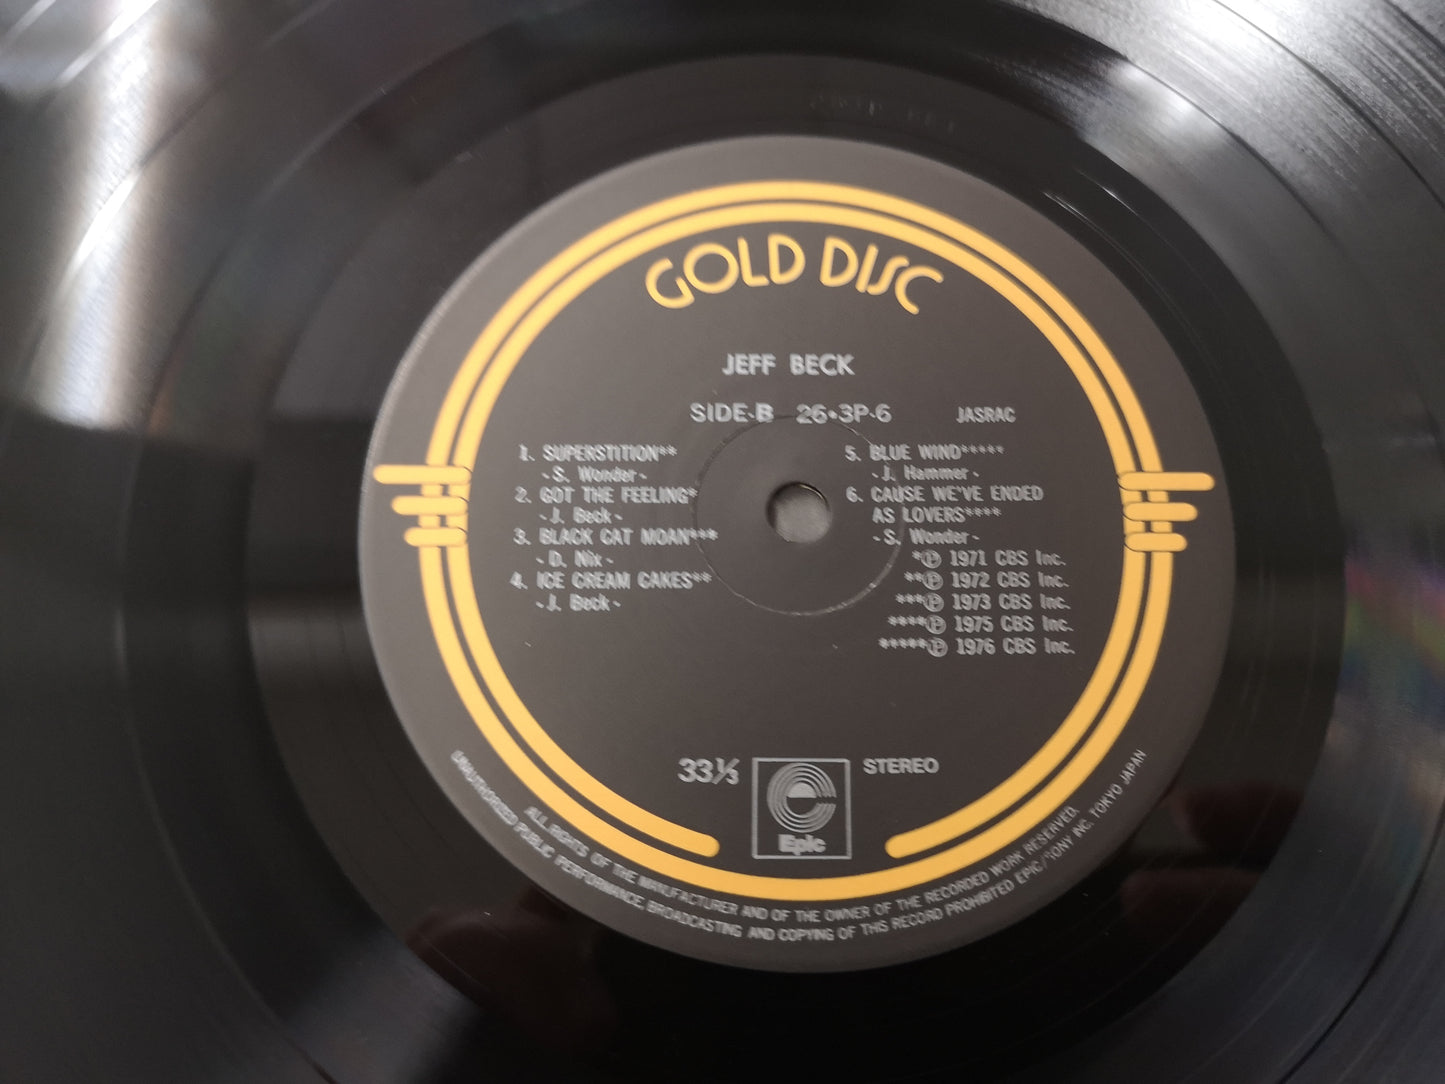 Jeff Beck "Gold Disc" Japan 1978 Obi & Insert EX/EX